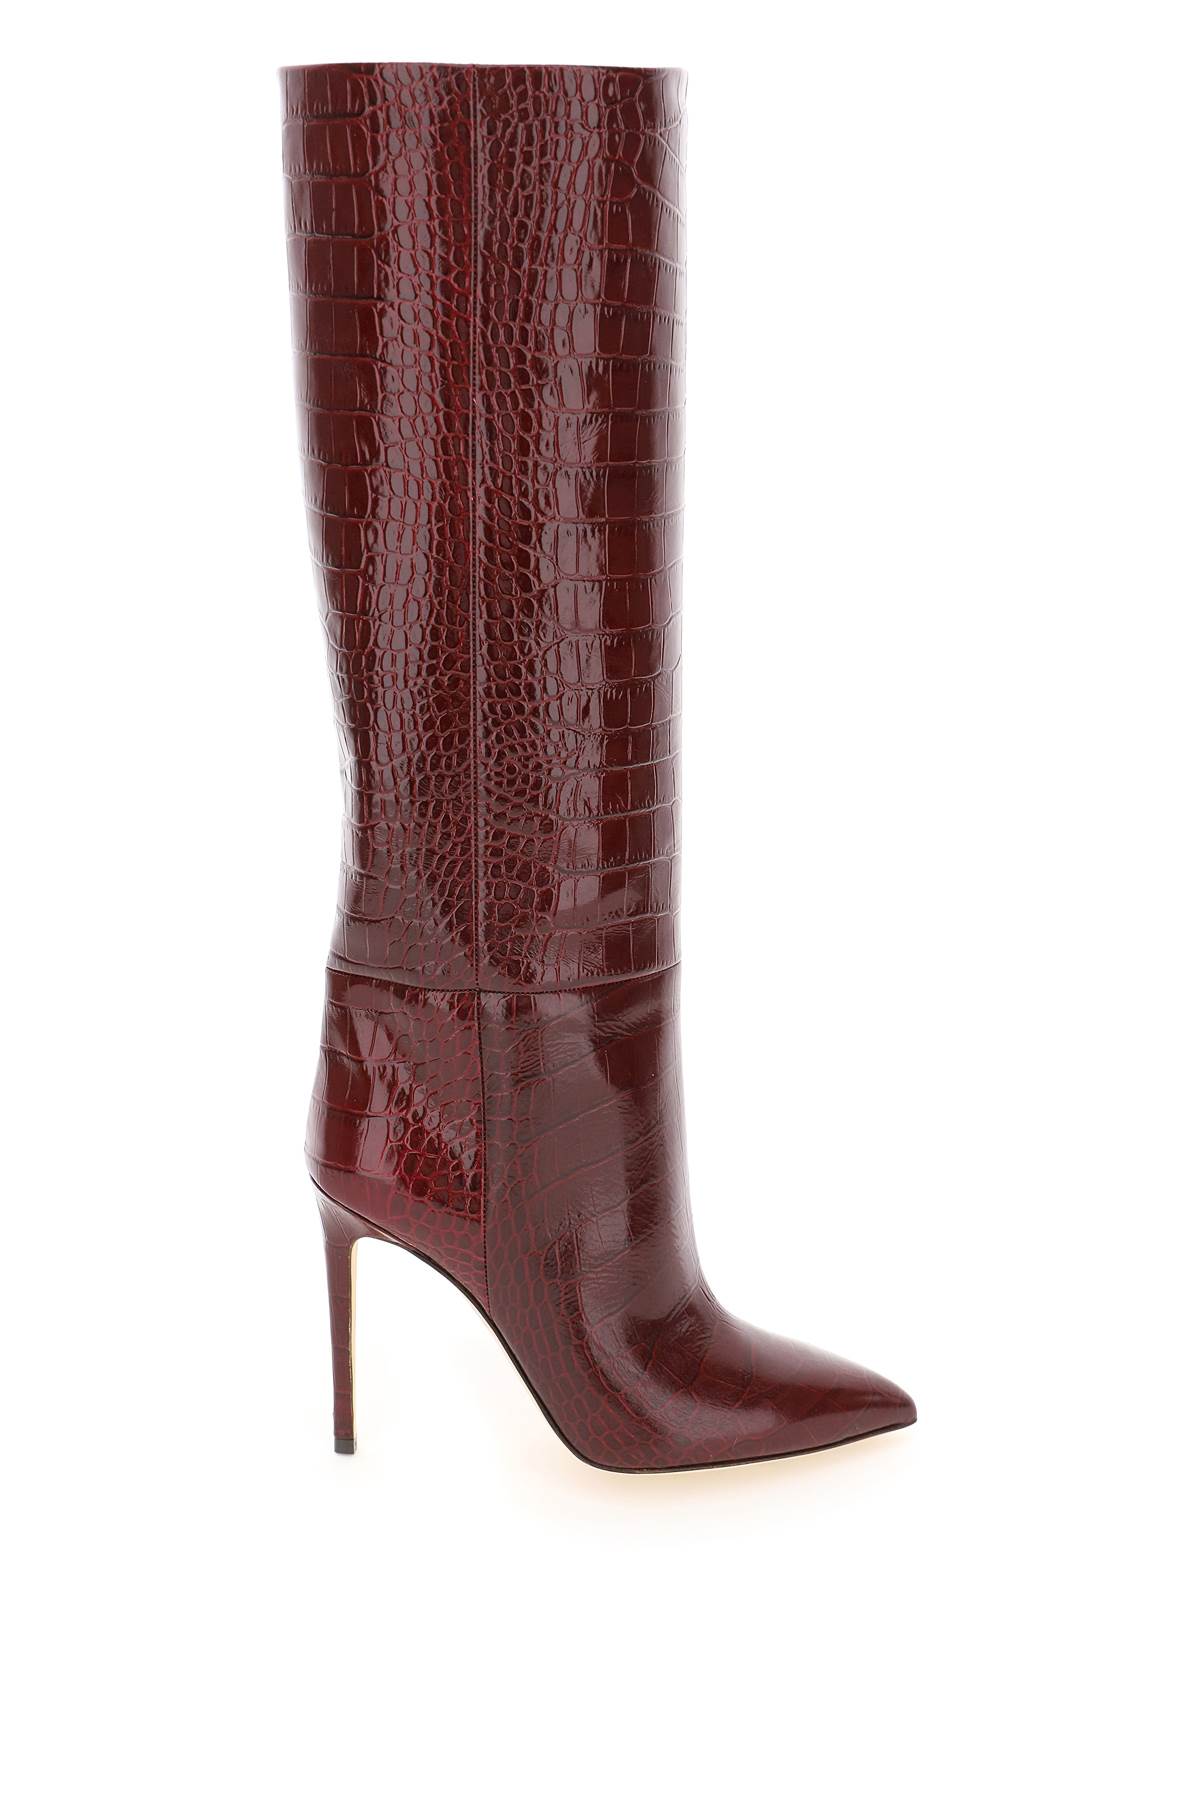 Paris Texas Croco-embossed Leather Stiletto Boots